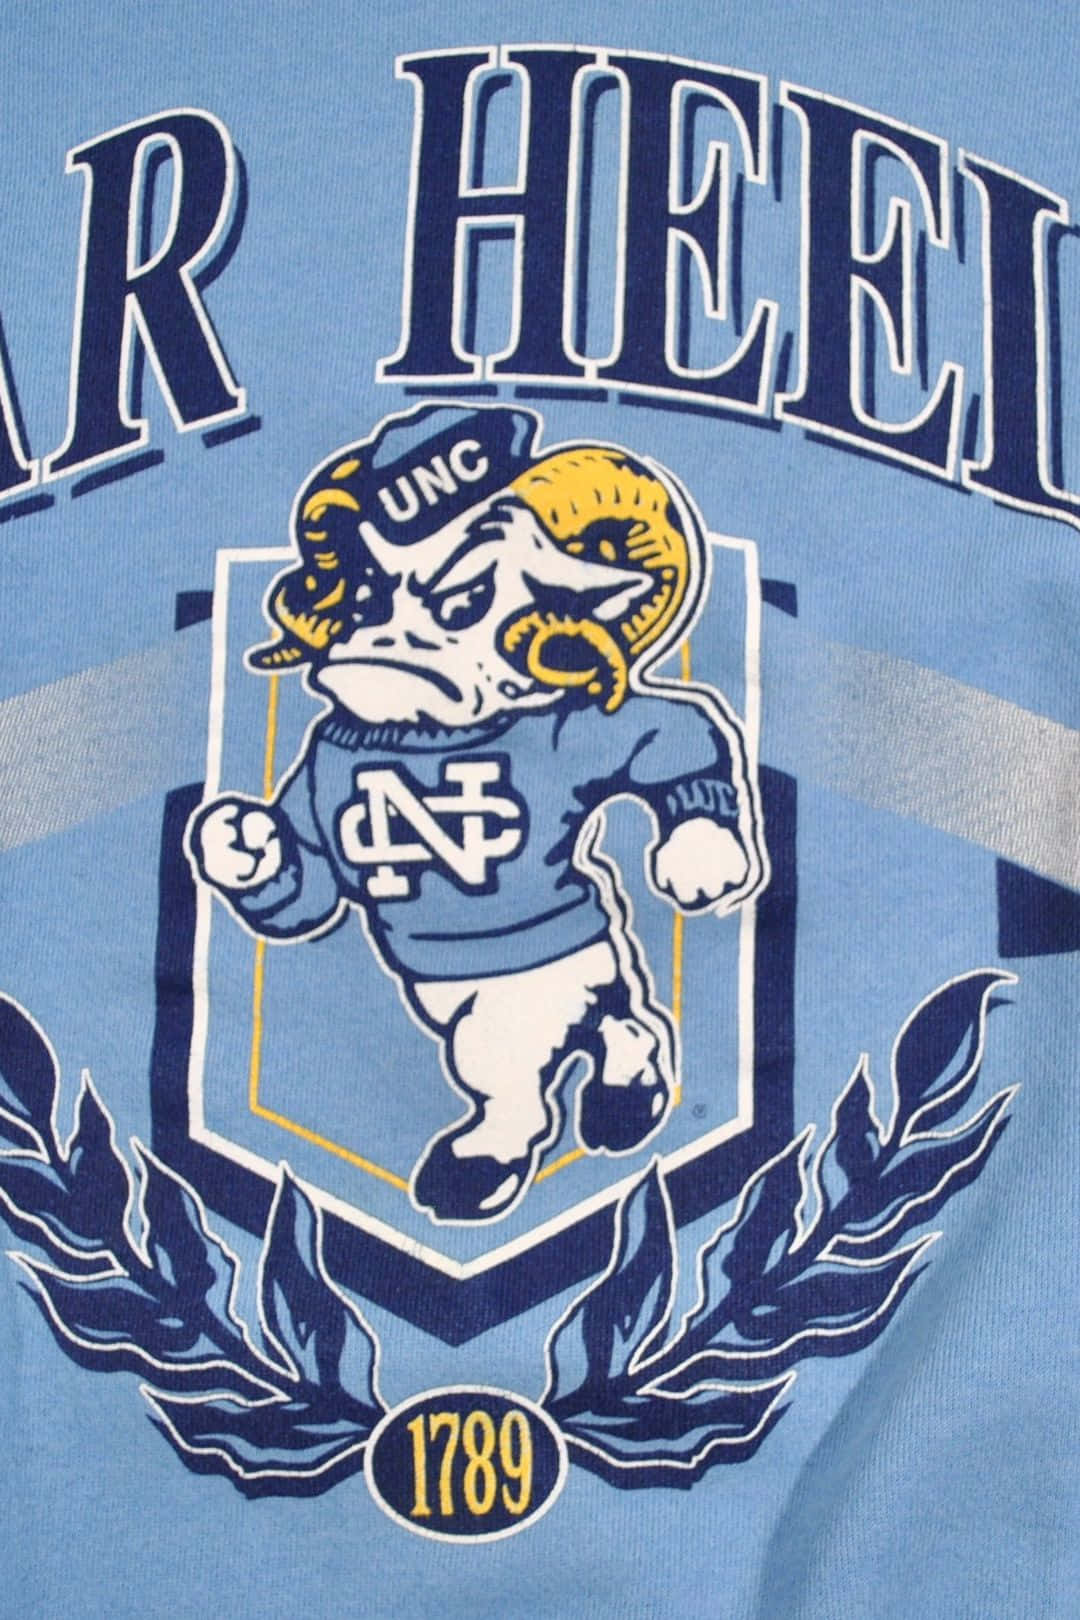 North Carolina Tar Heels T-shirt Background